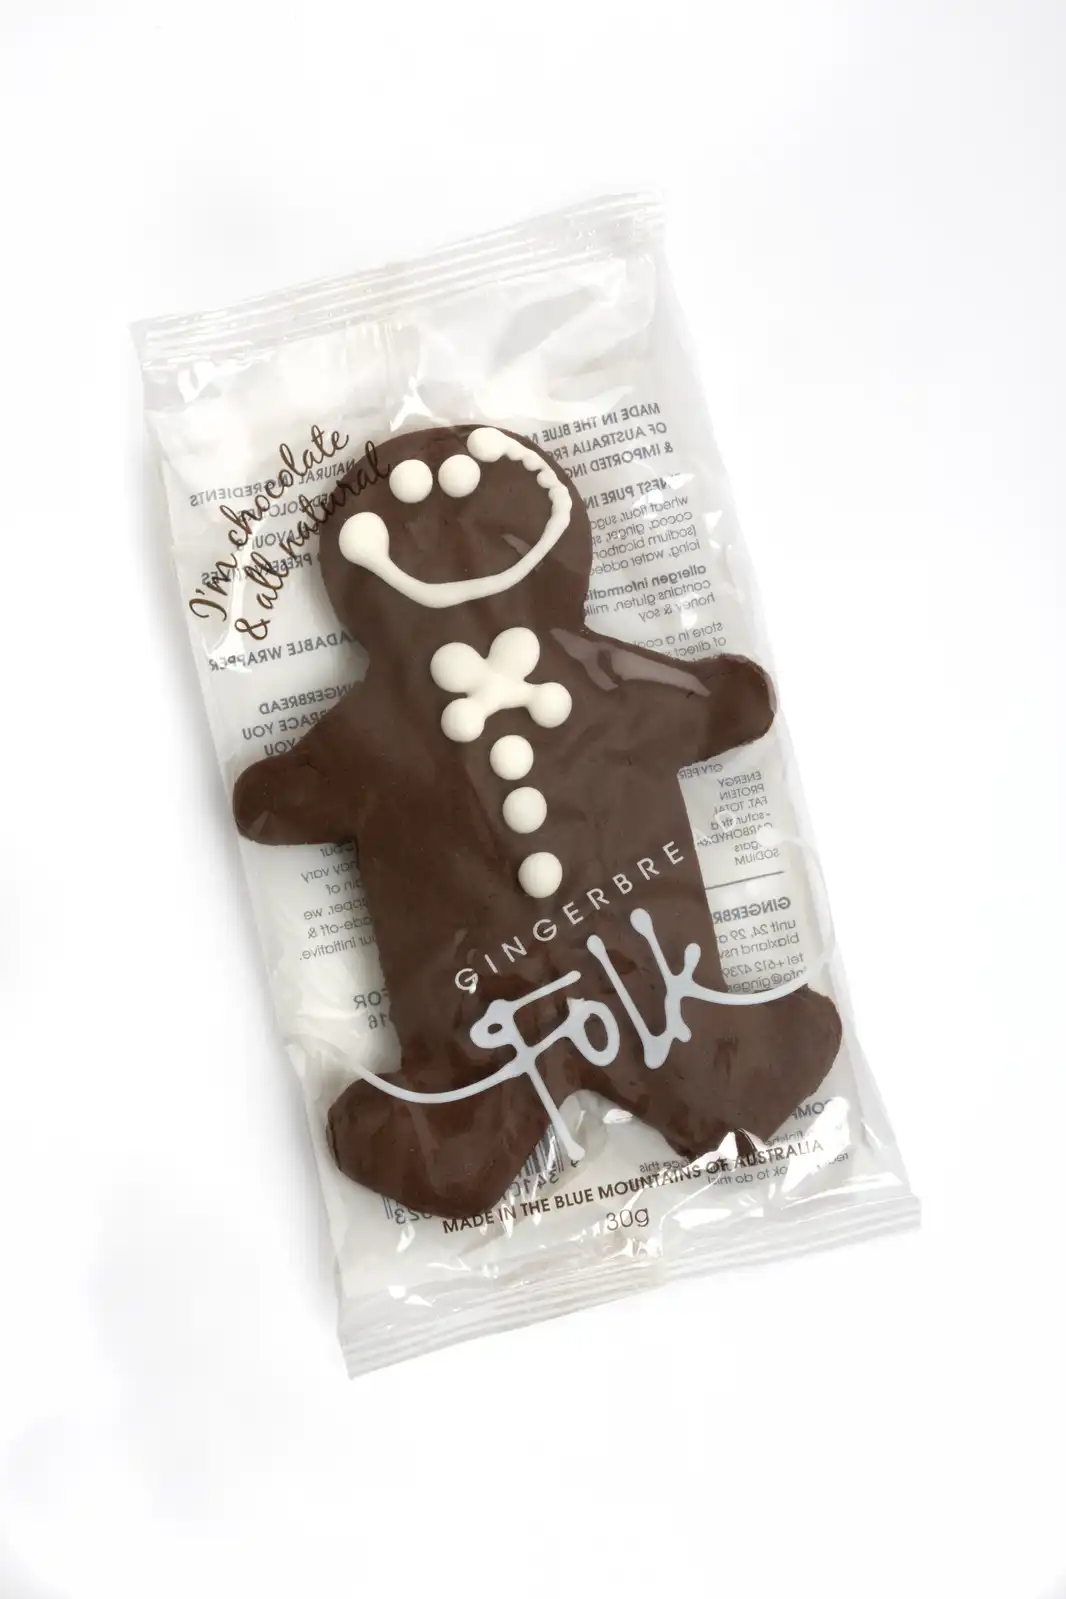 Gingerbread Folk - Chocolate Gingerbread Man (Gluten Free)